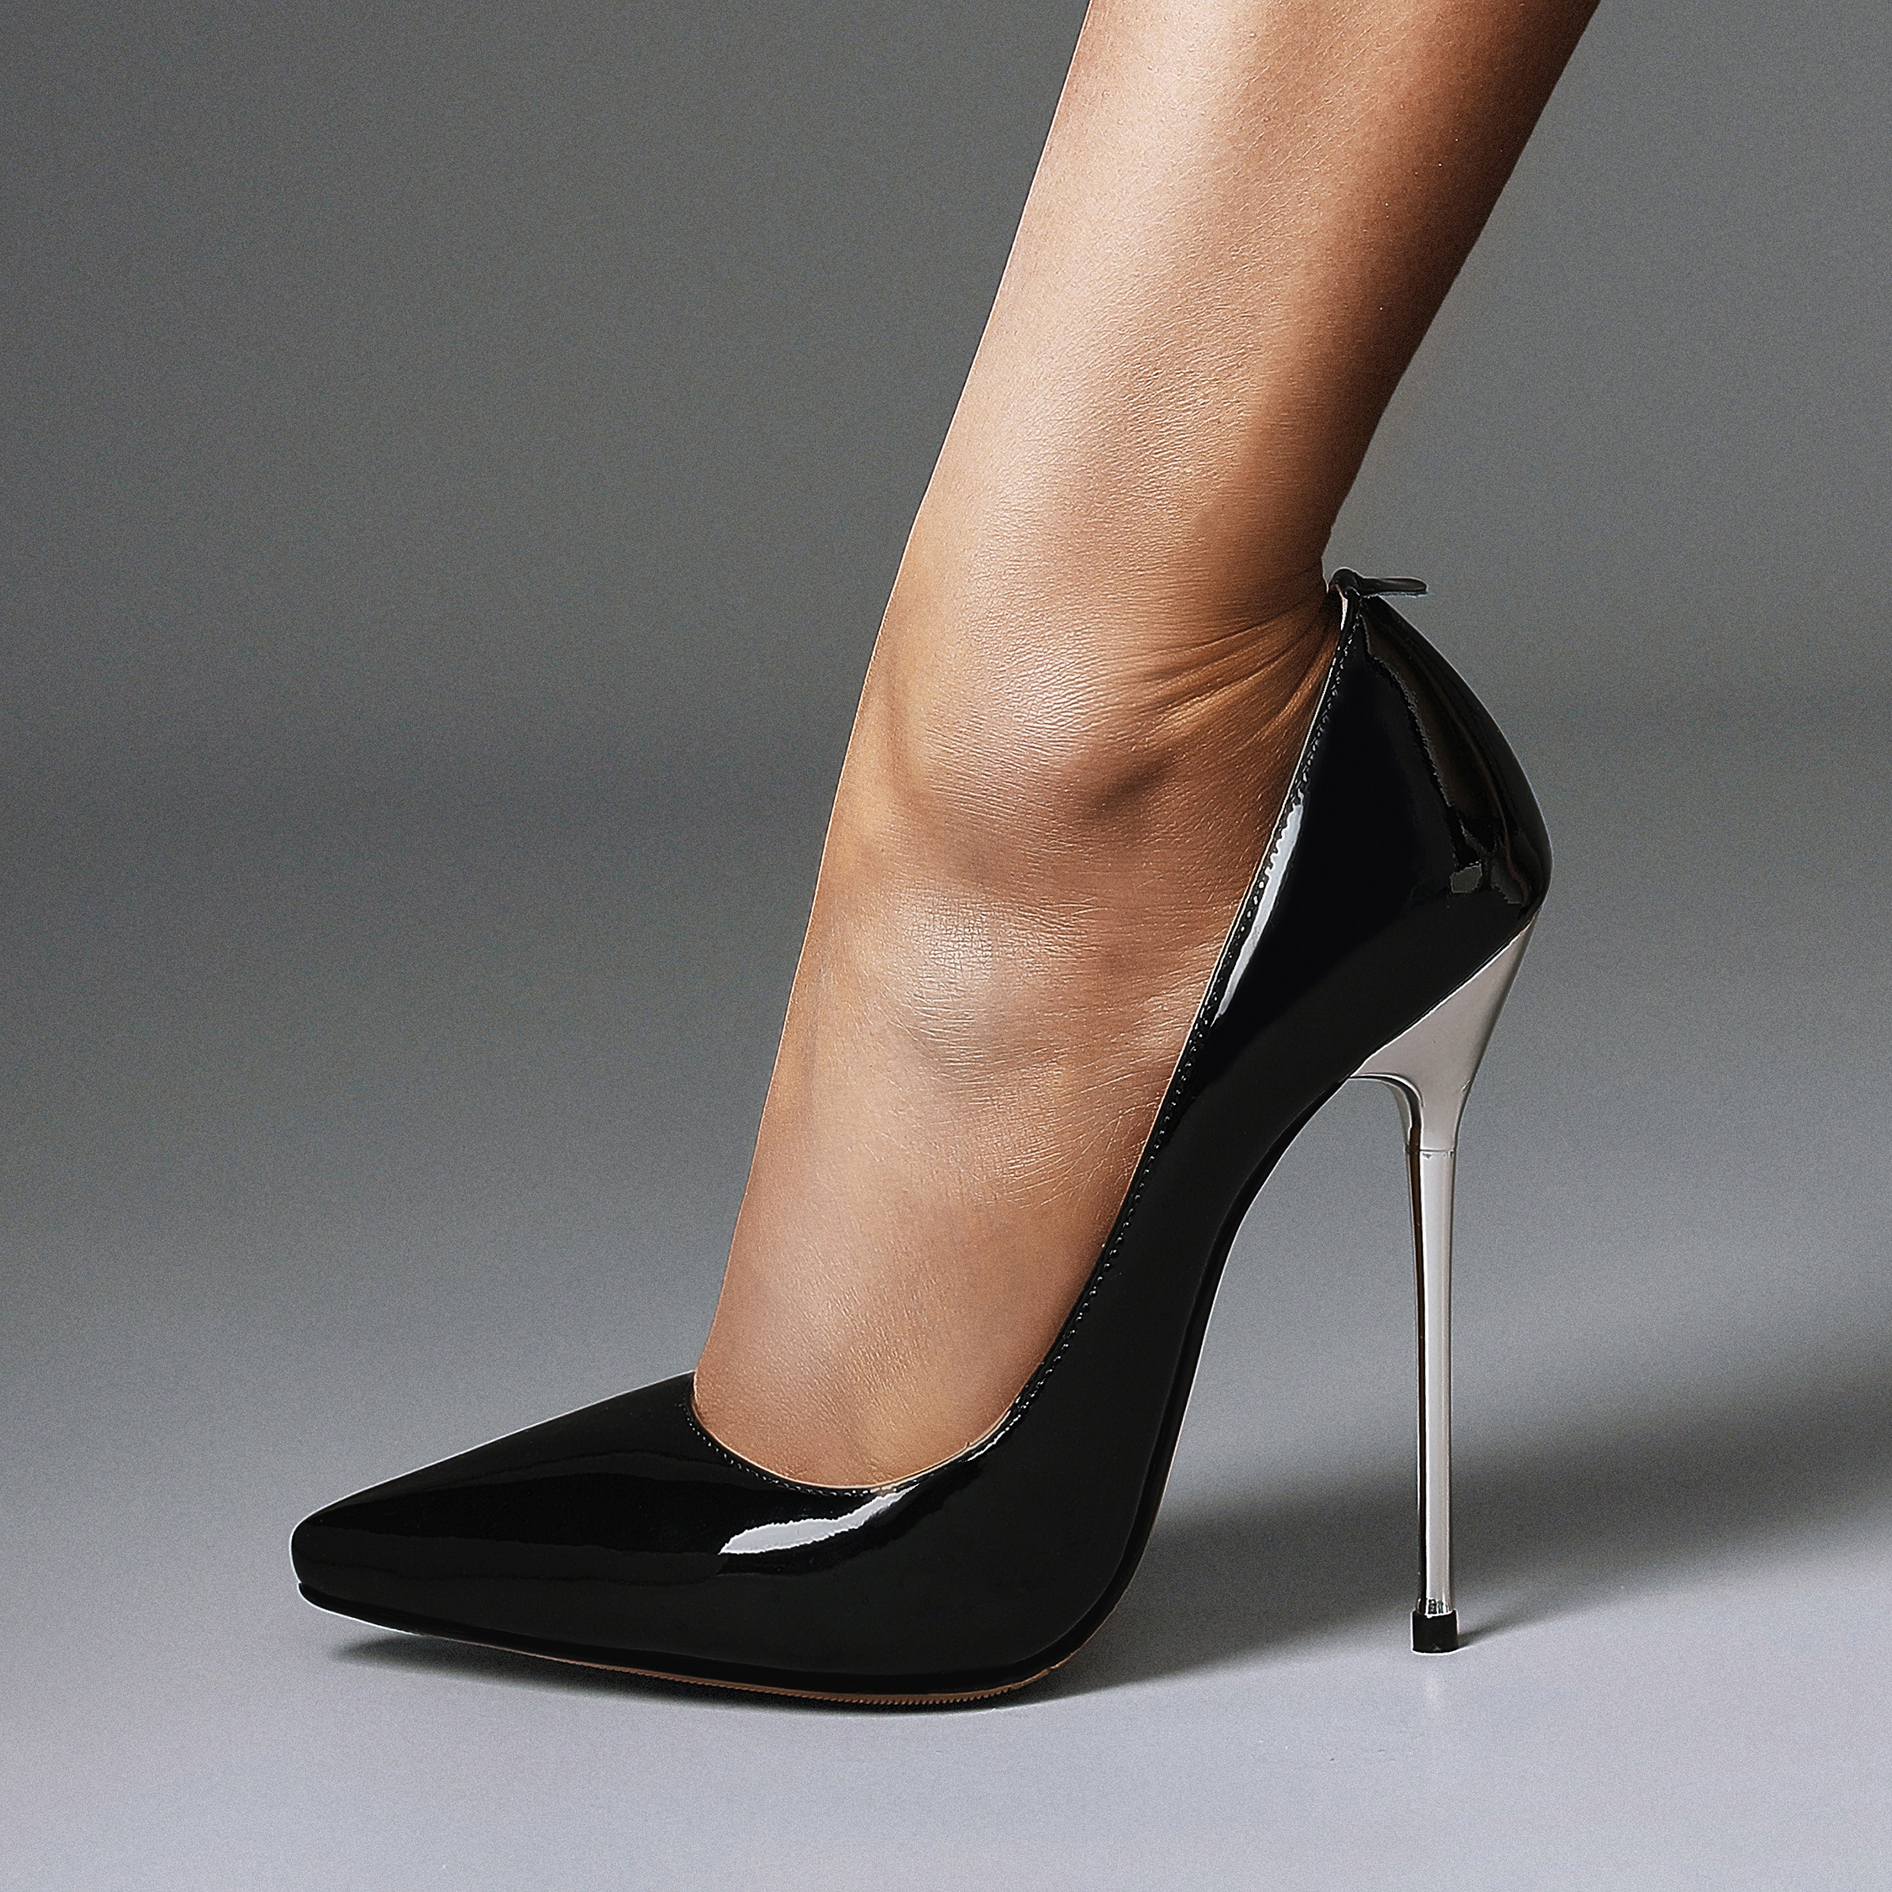 US$ 51.00 - Arden Furtado Summer Fashion Women's Shoes Pointed Toe ...